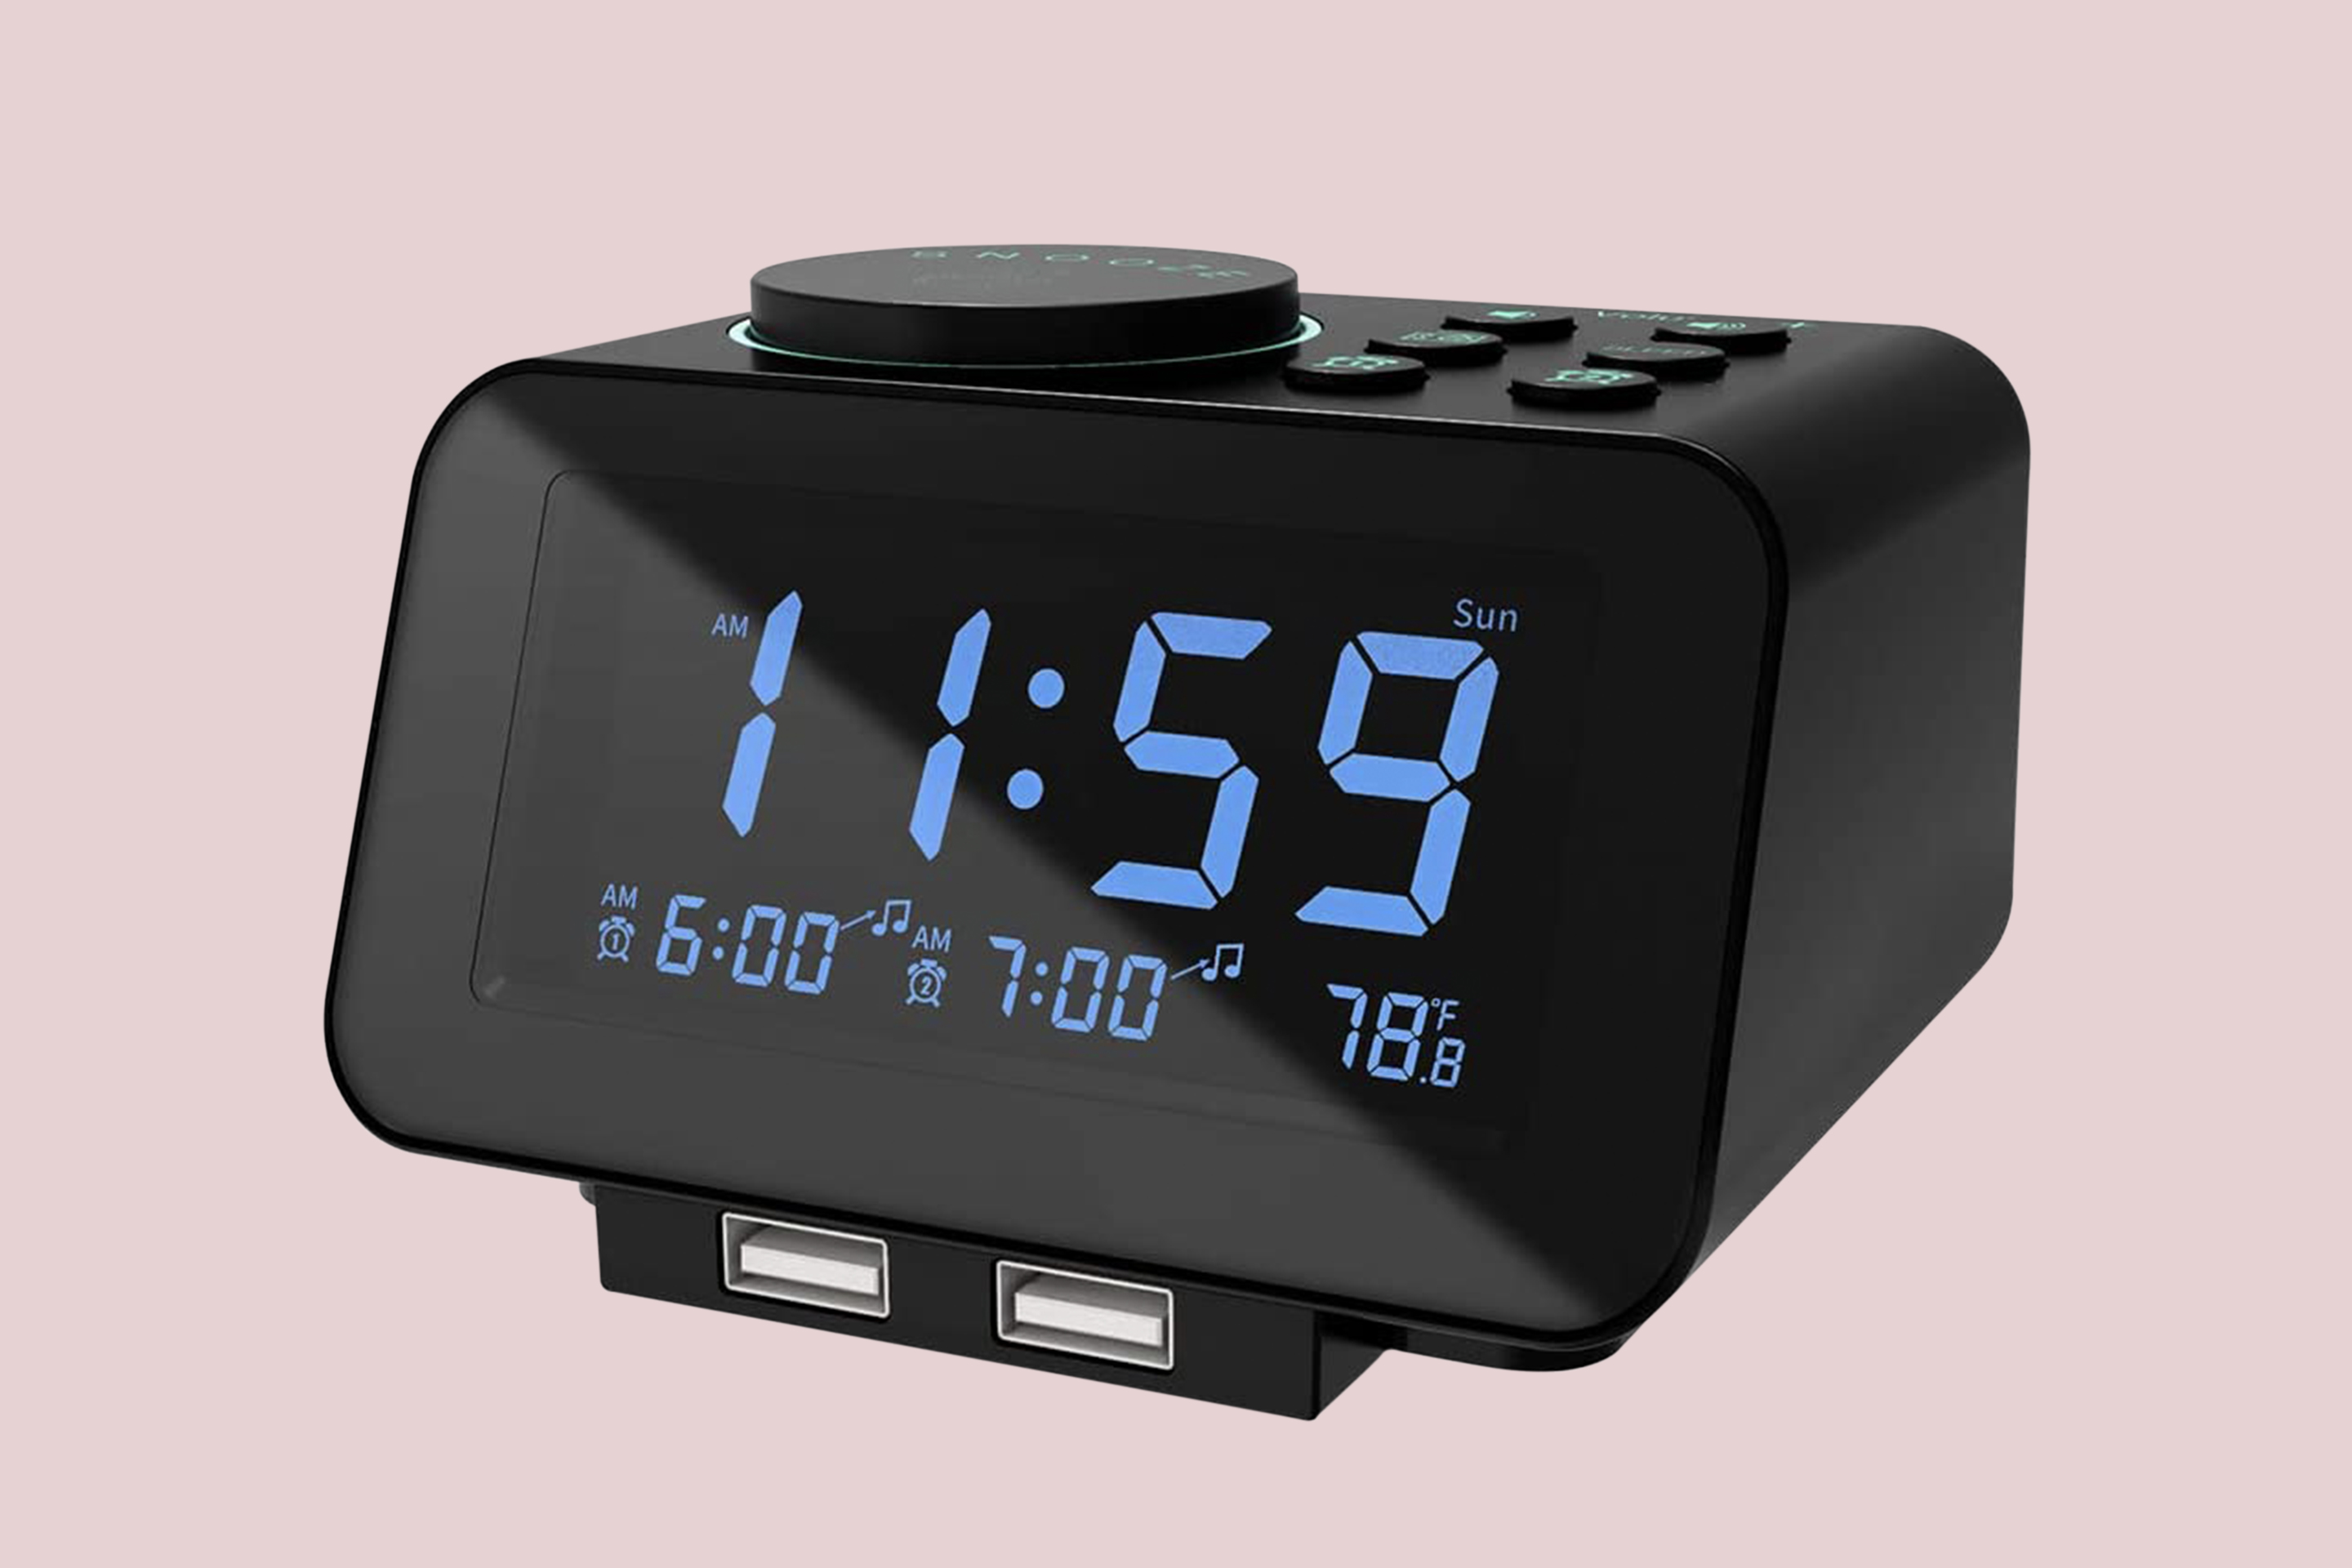 USCCE Digital Alarm Clock Radio